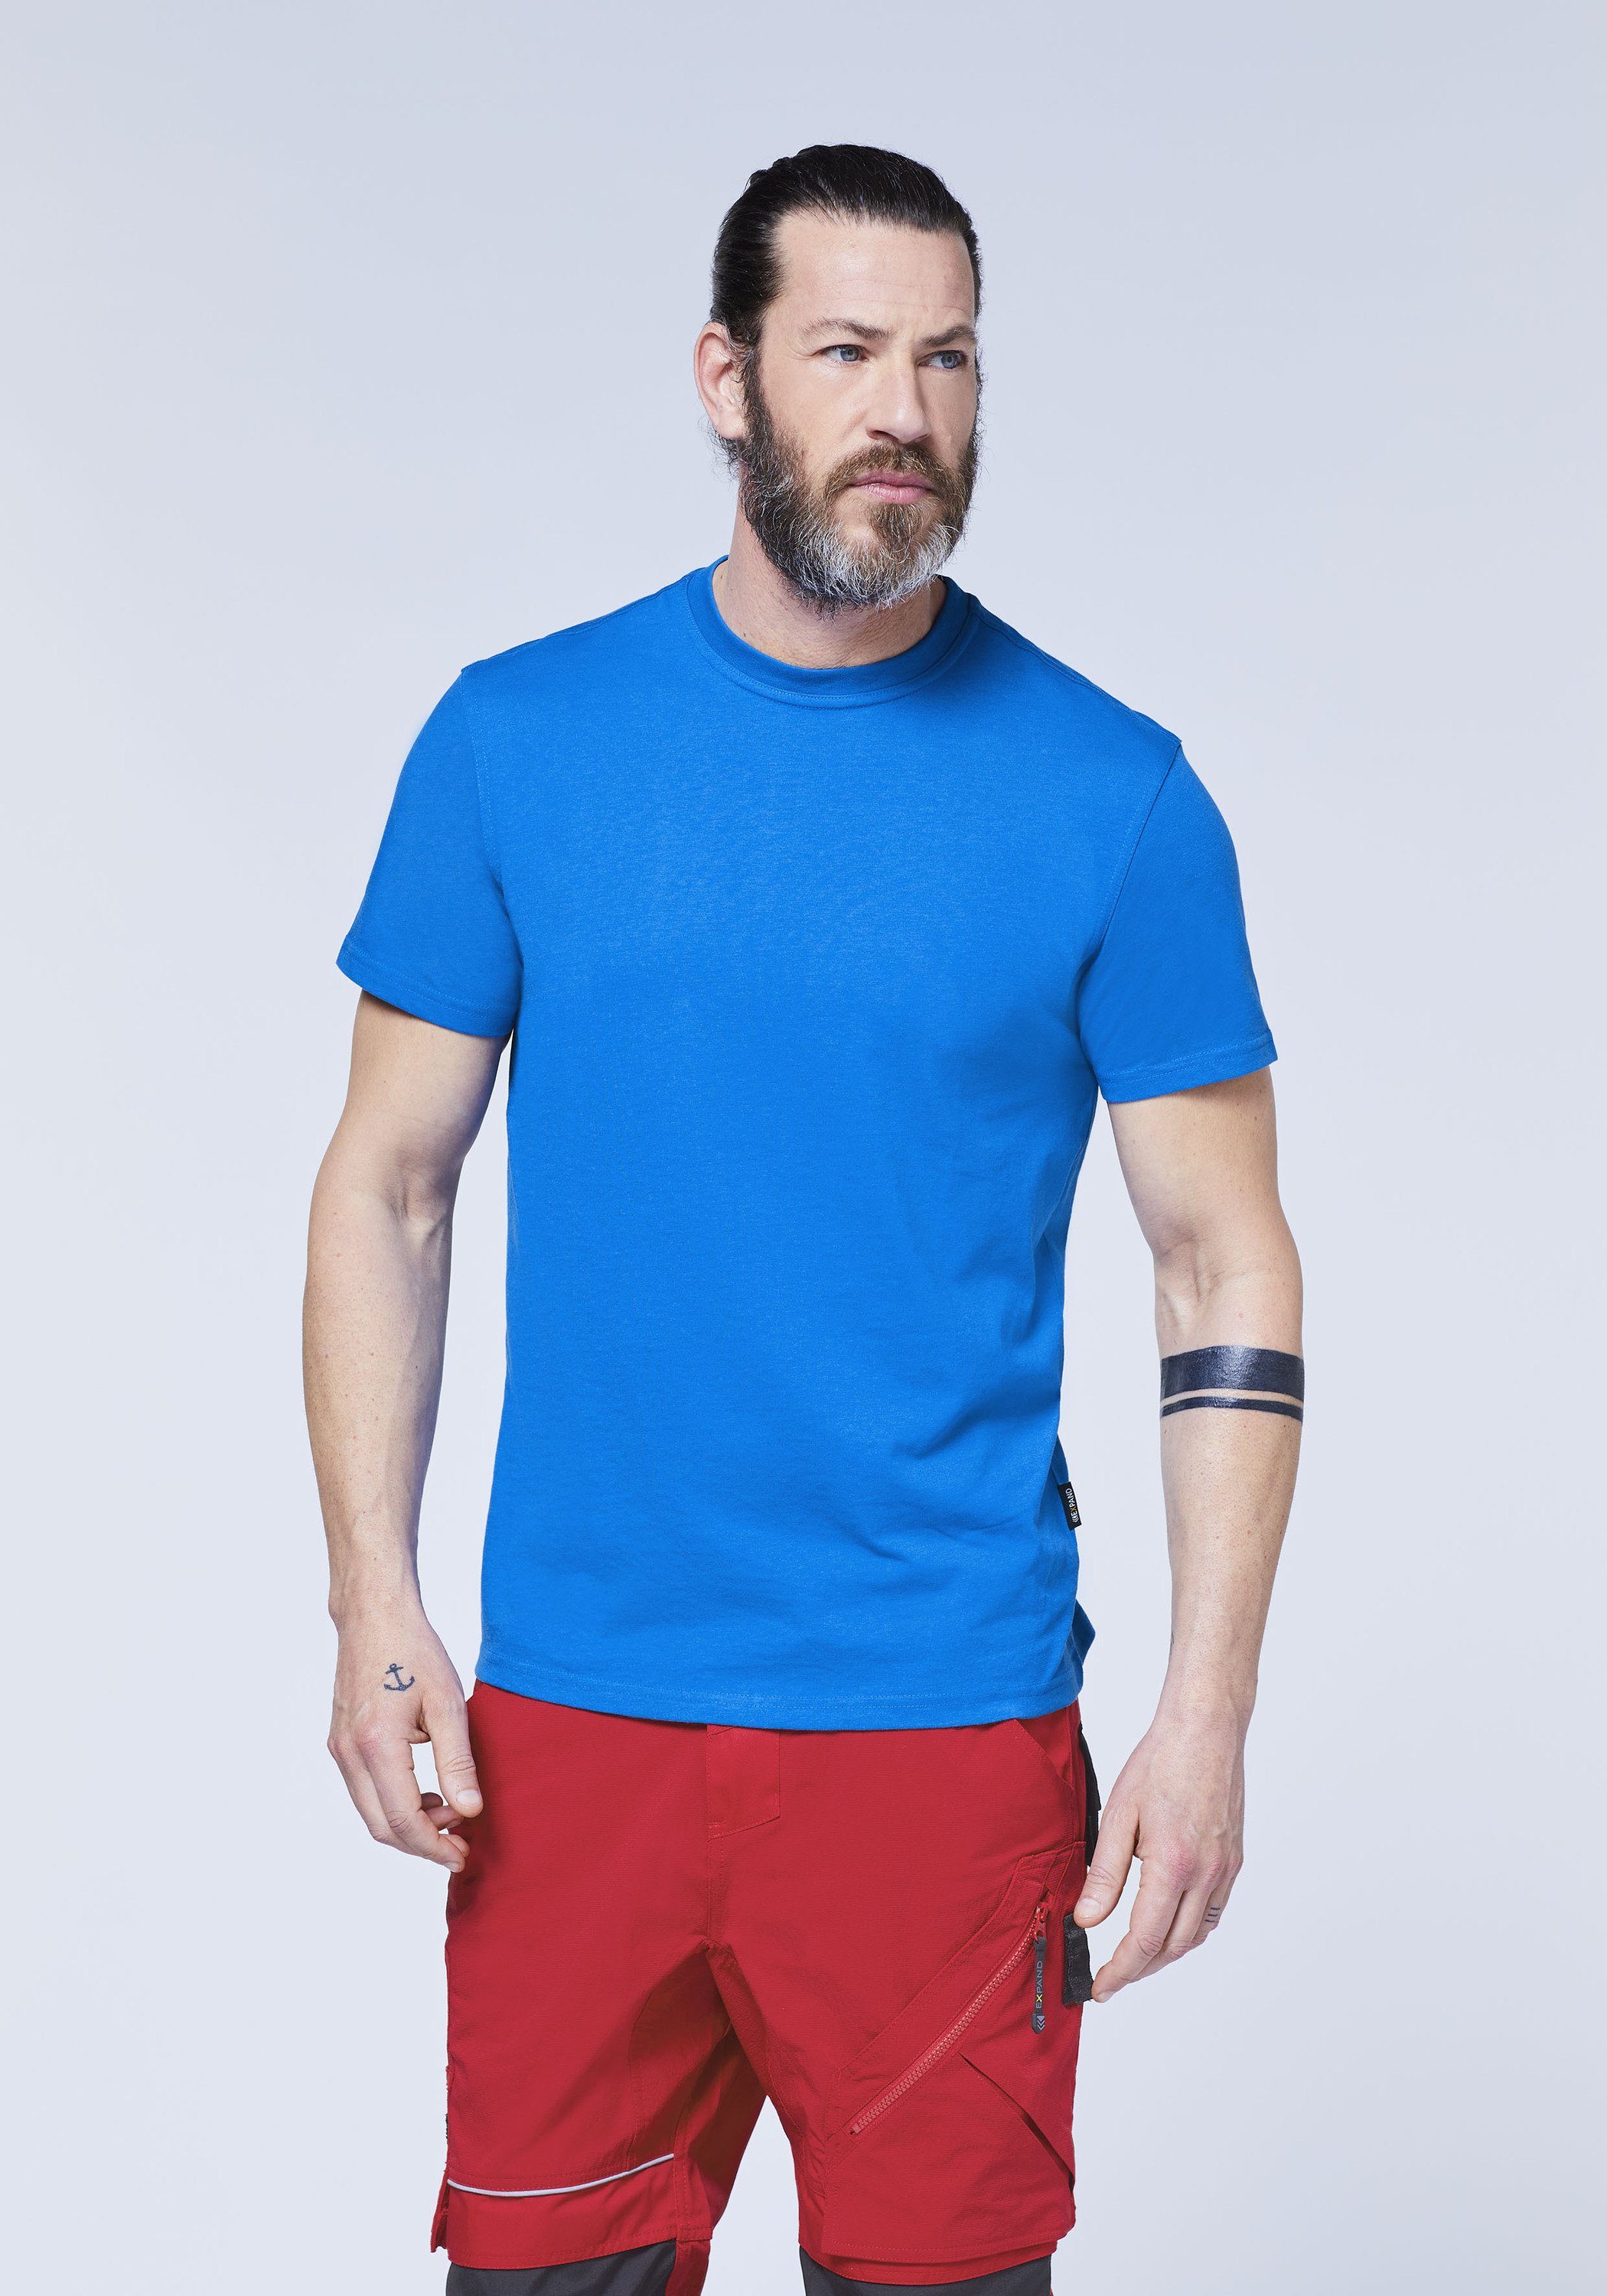 Übergröße T-Shirt royalblau Expand in